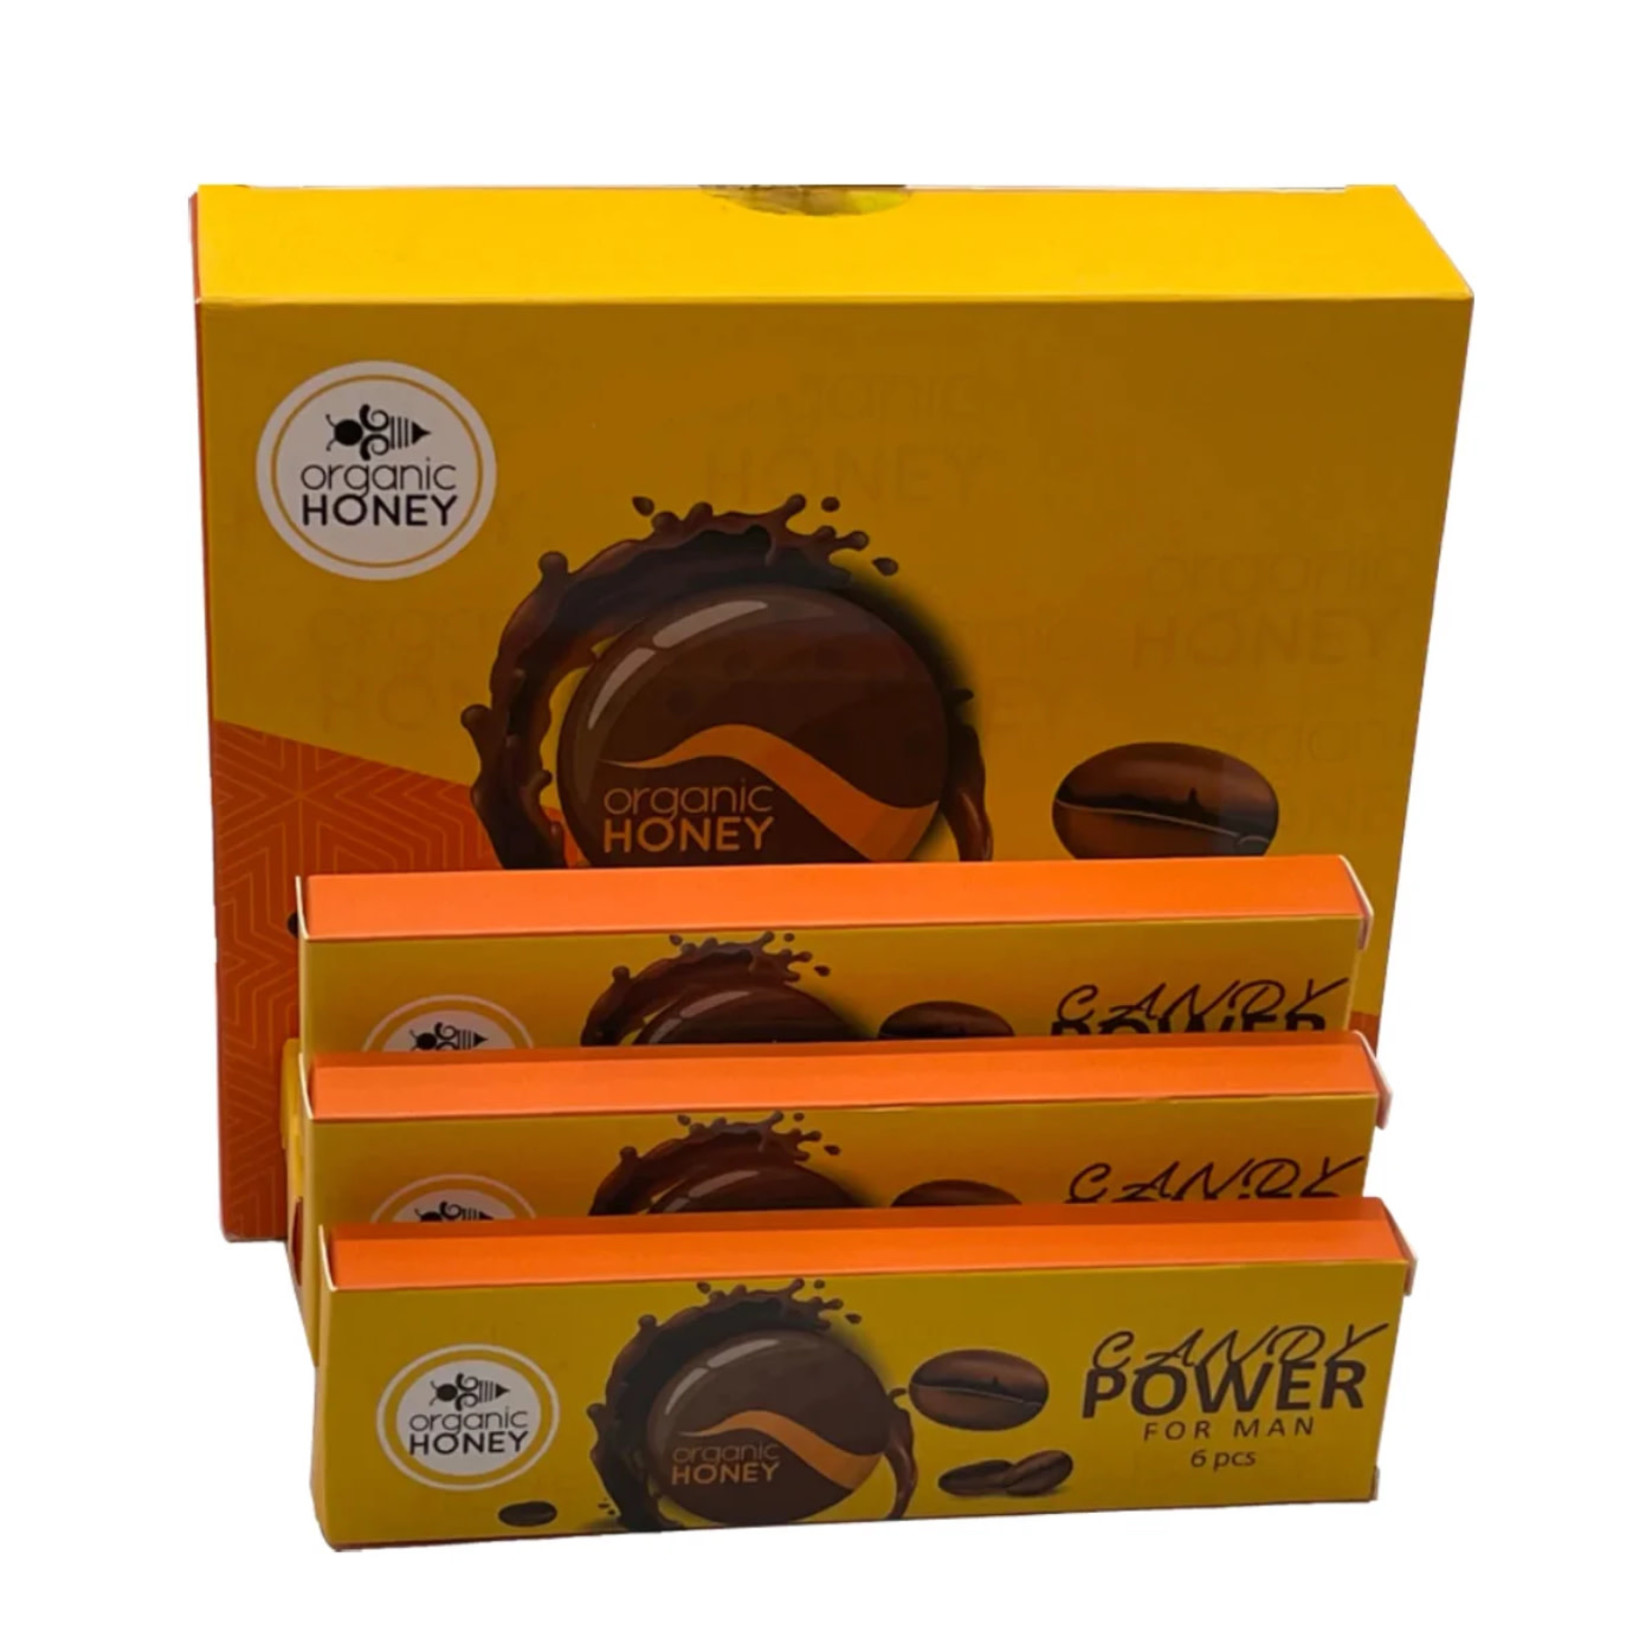 Organic Honey Organic Honey- Chocolate Candy Power for Man (6 pcs.)